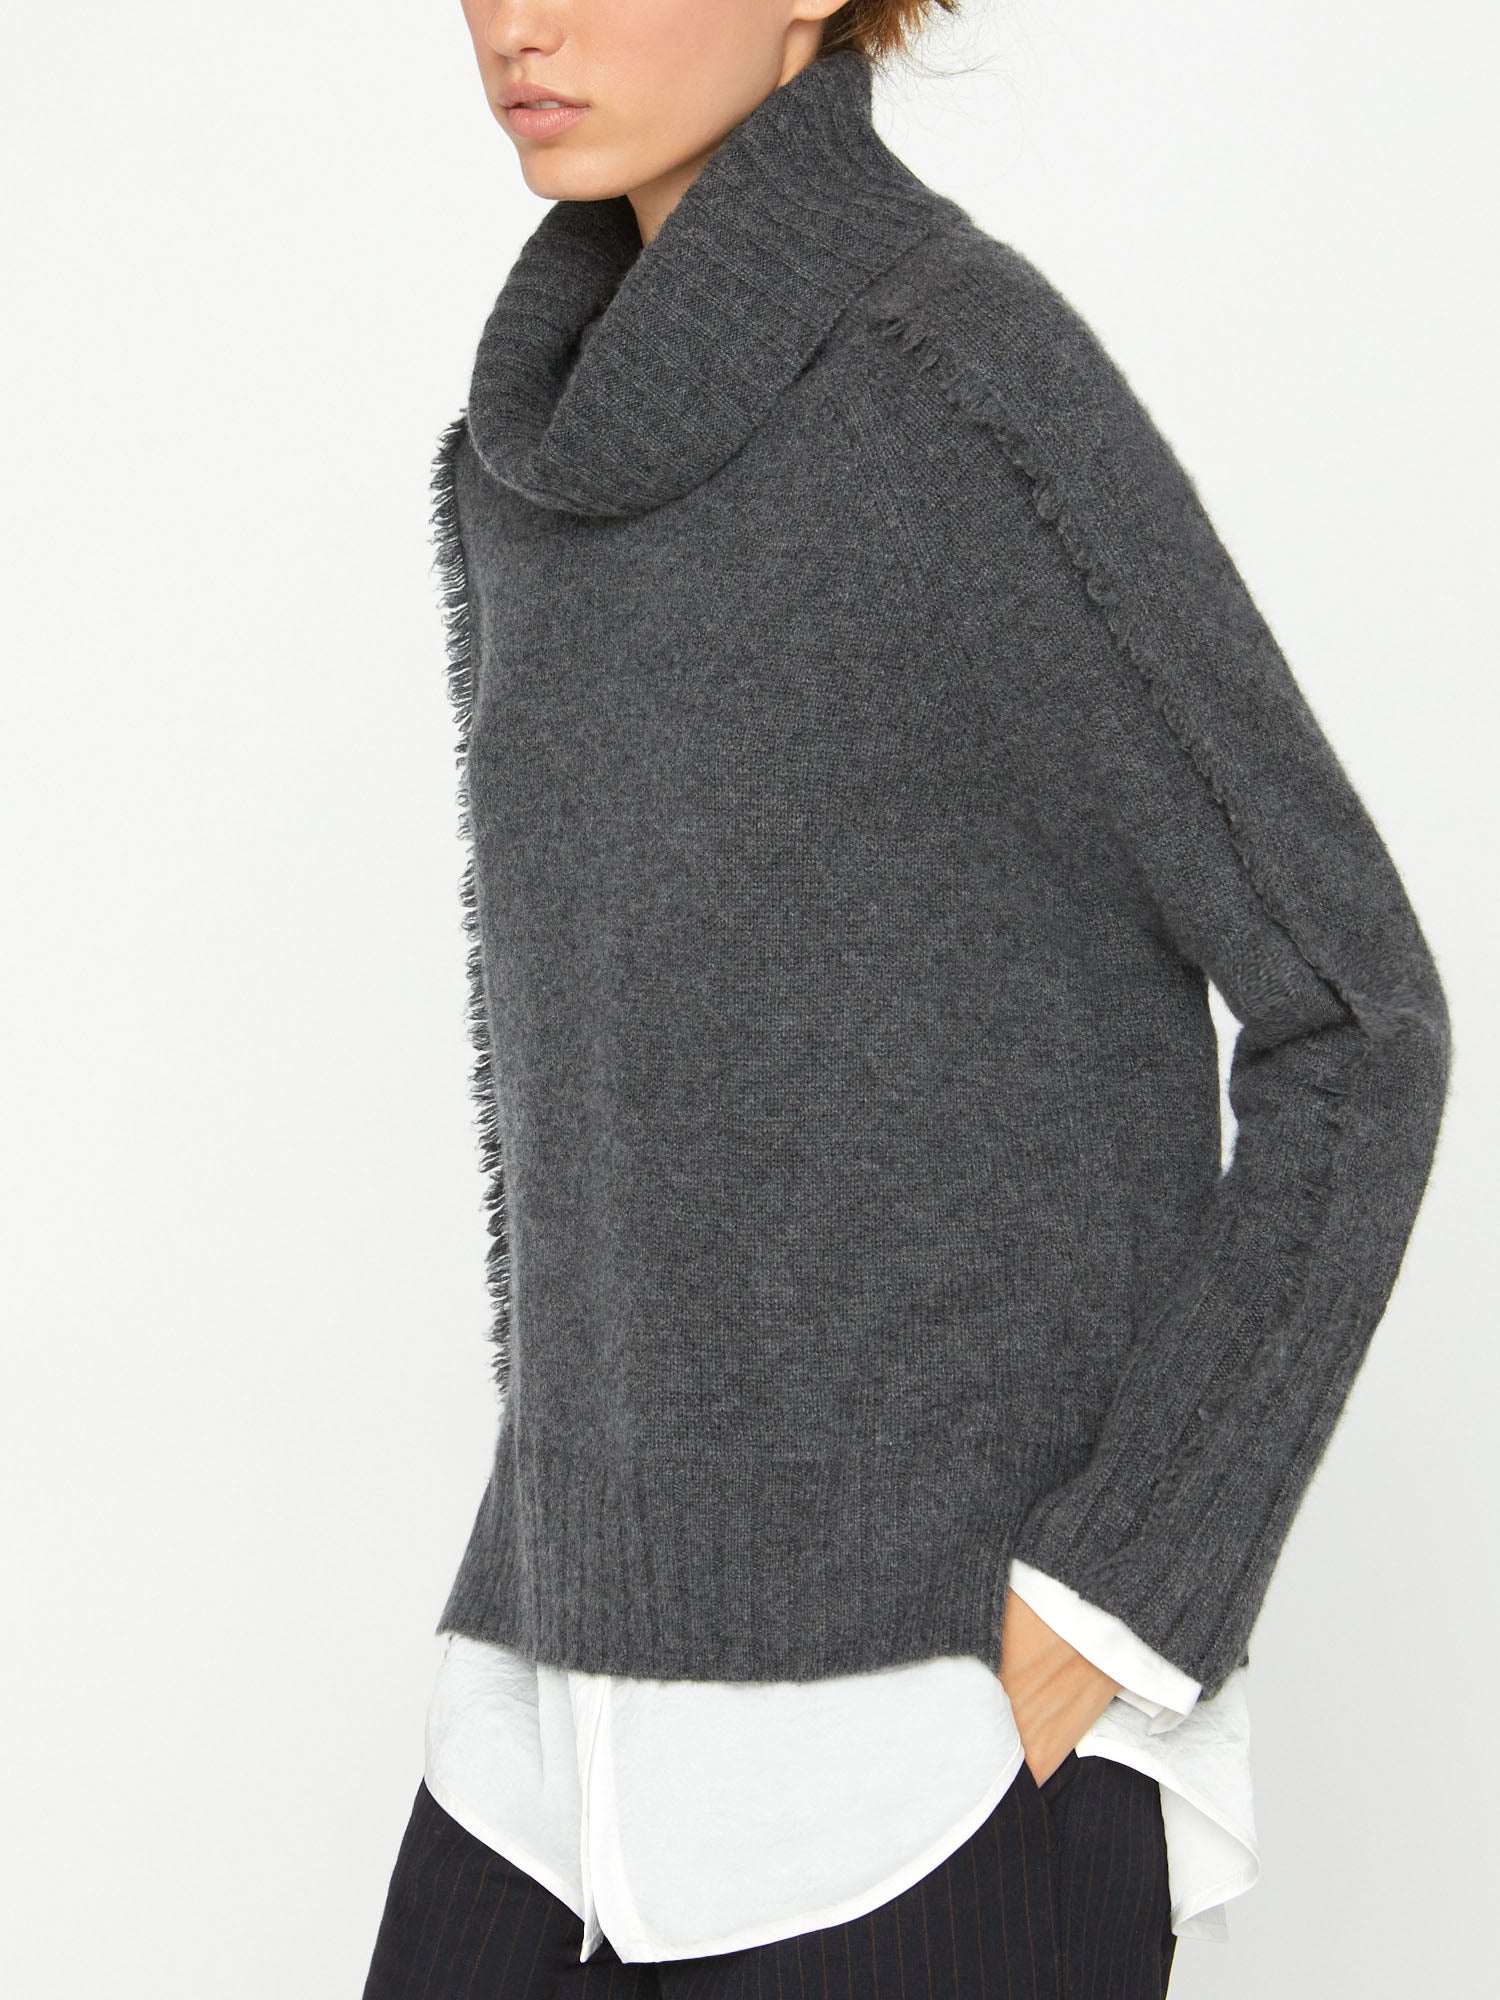 Jolie dark grey layered turtleneck sweater side view